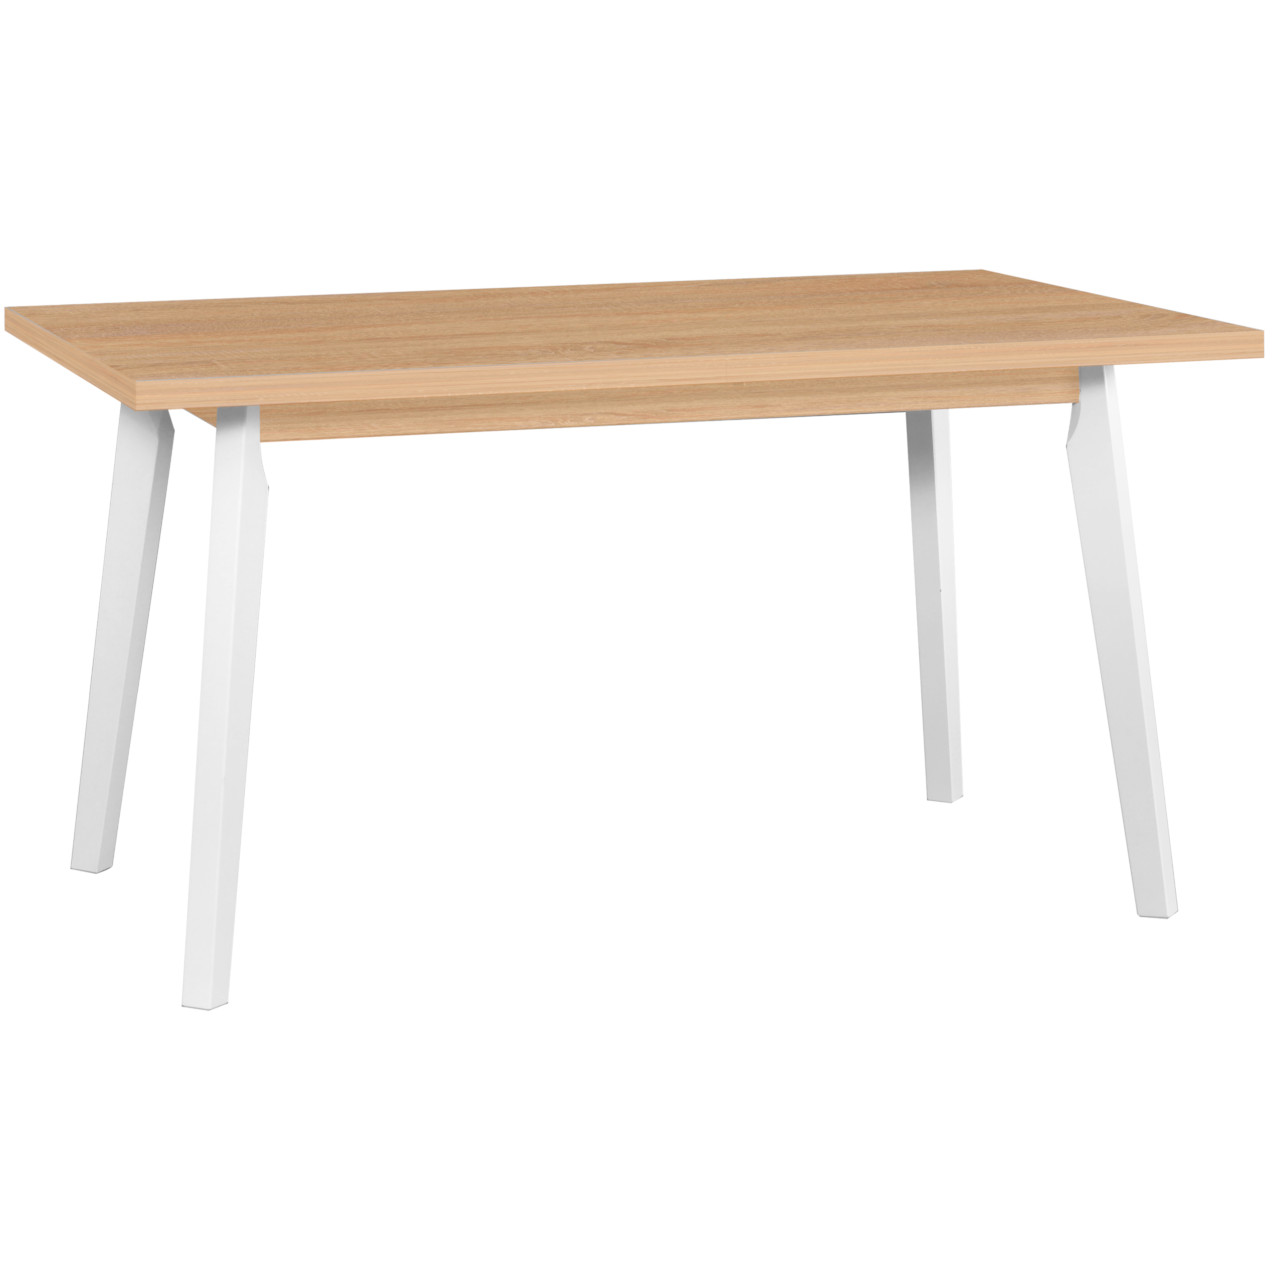 Table OSLO 5 80x140/180 grandson laminate / white